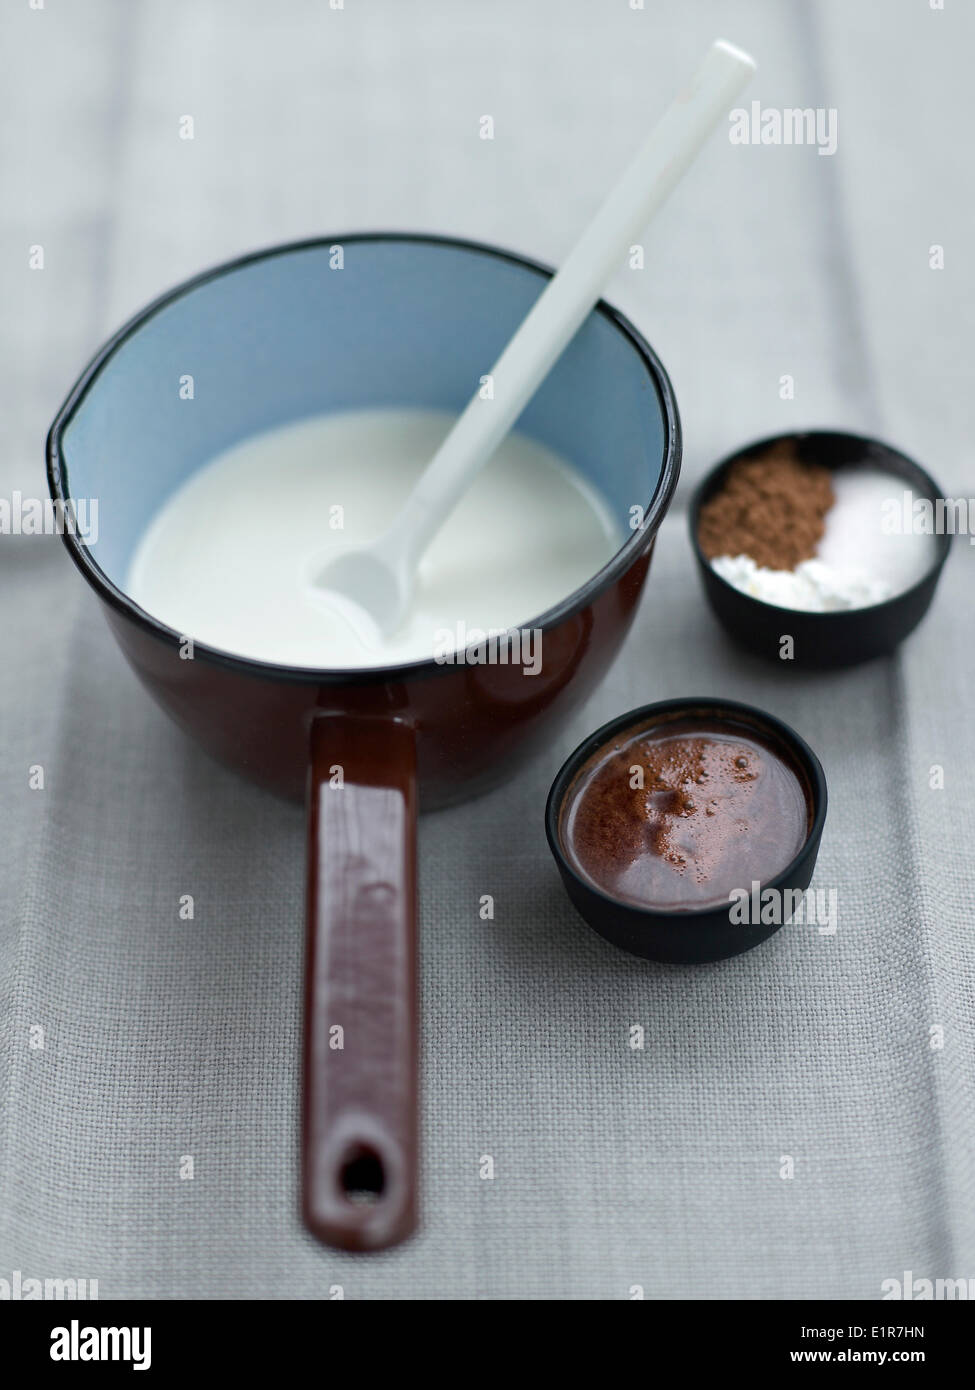 Heating the milk in a saucepan Stock Photo